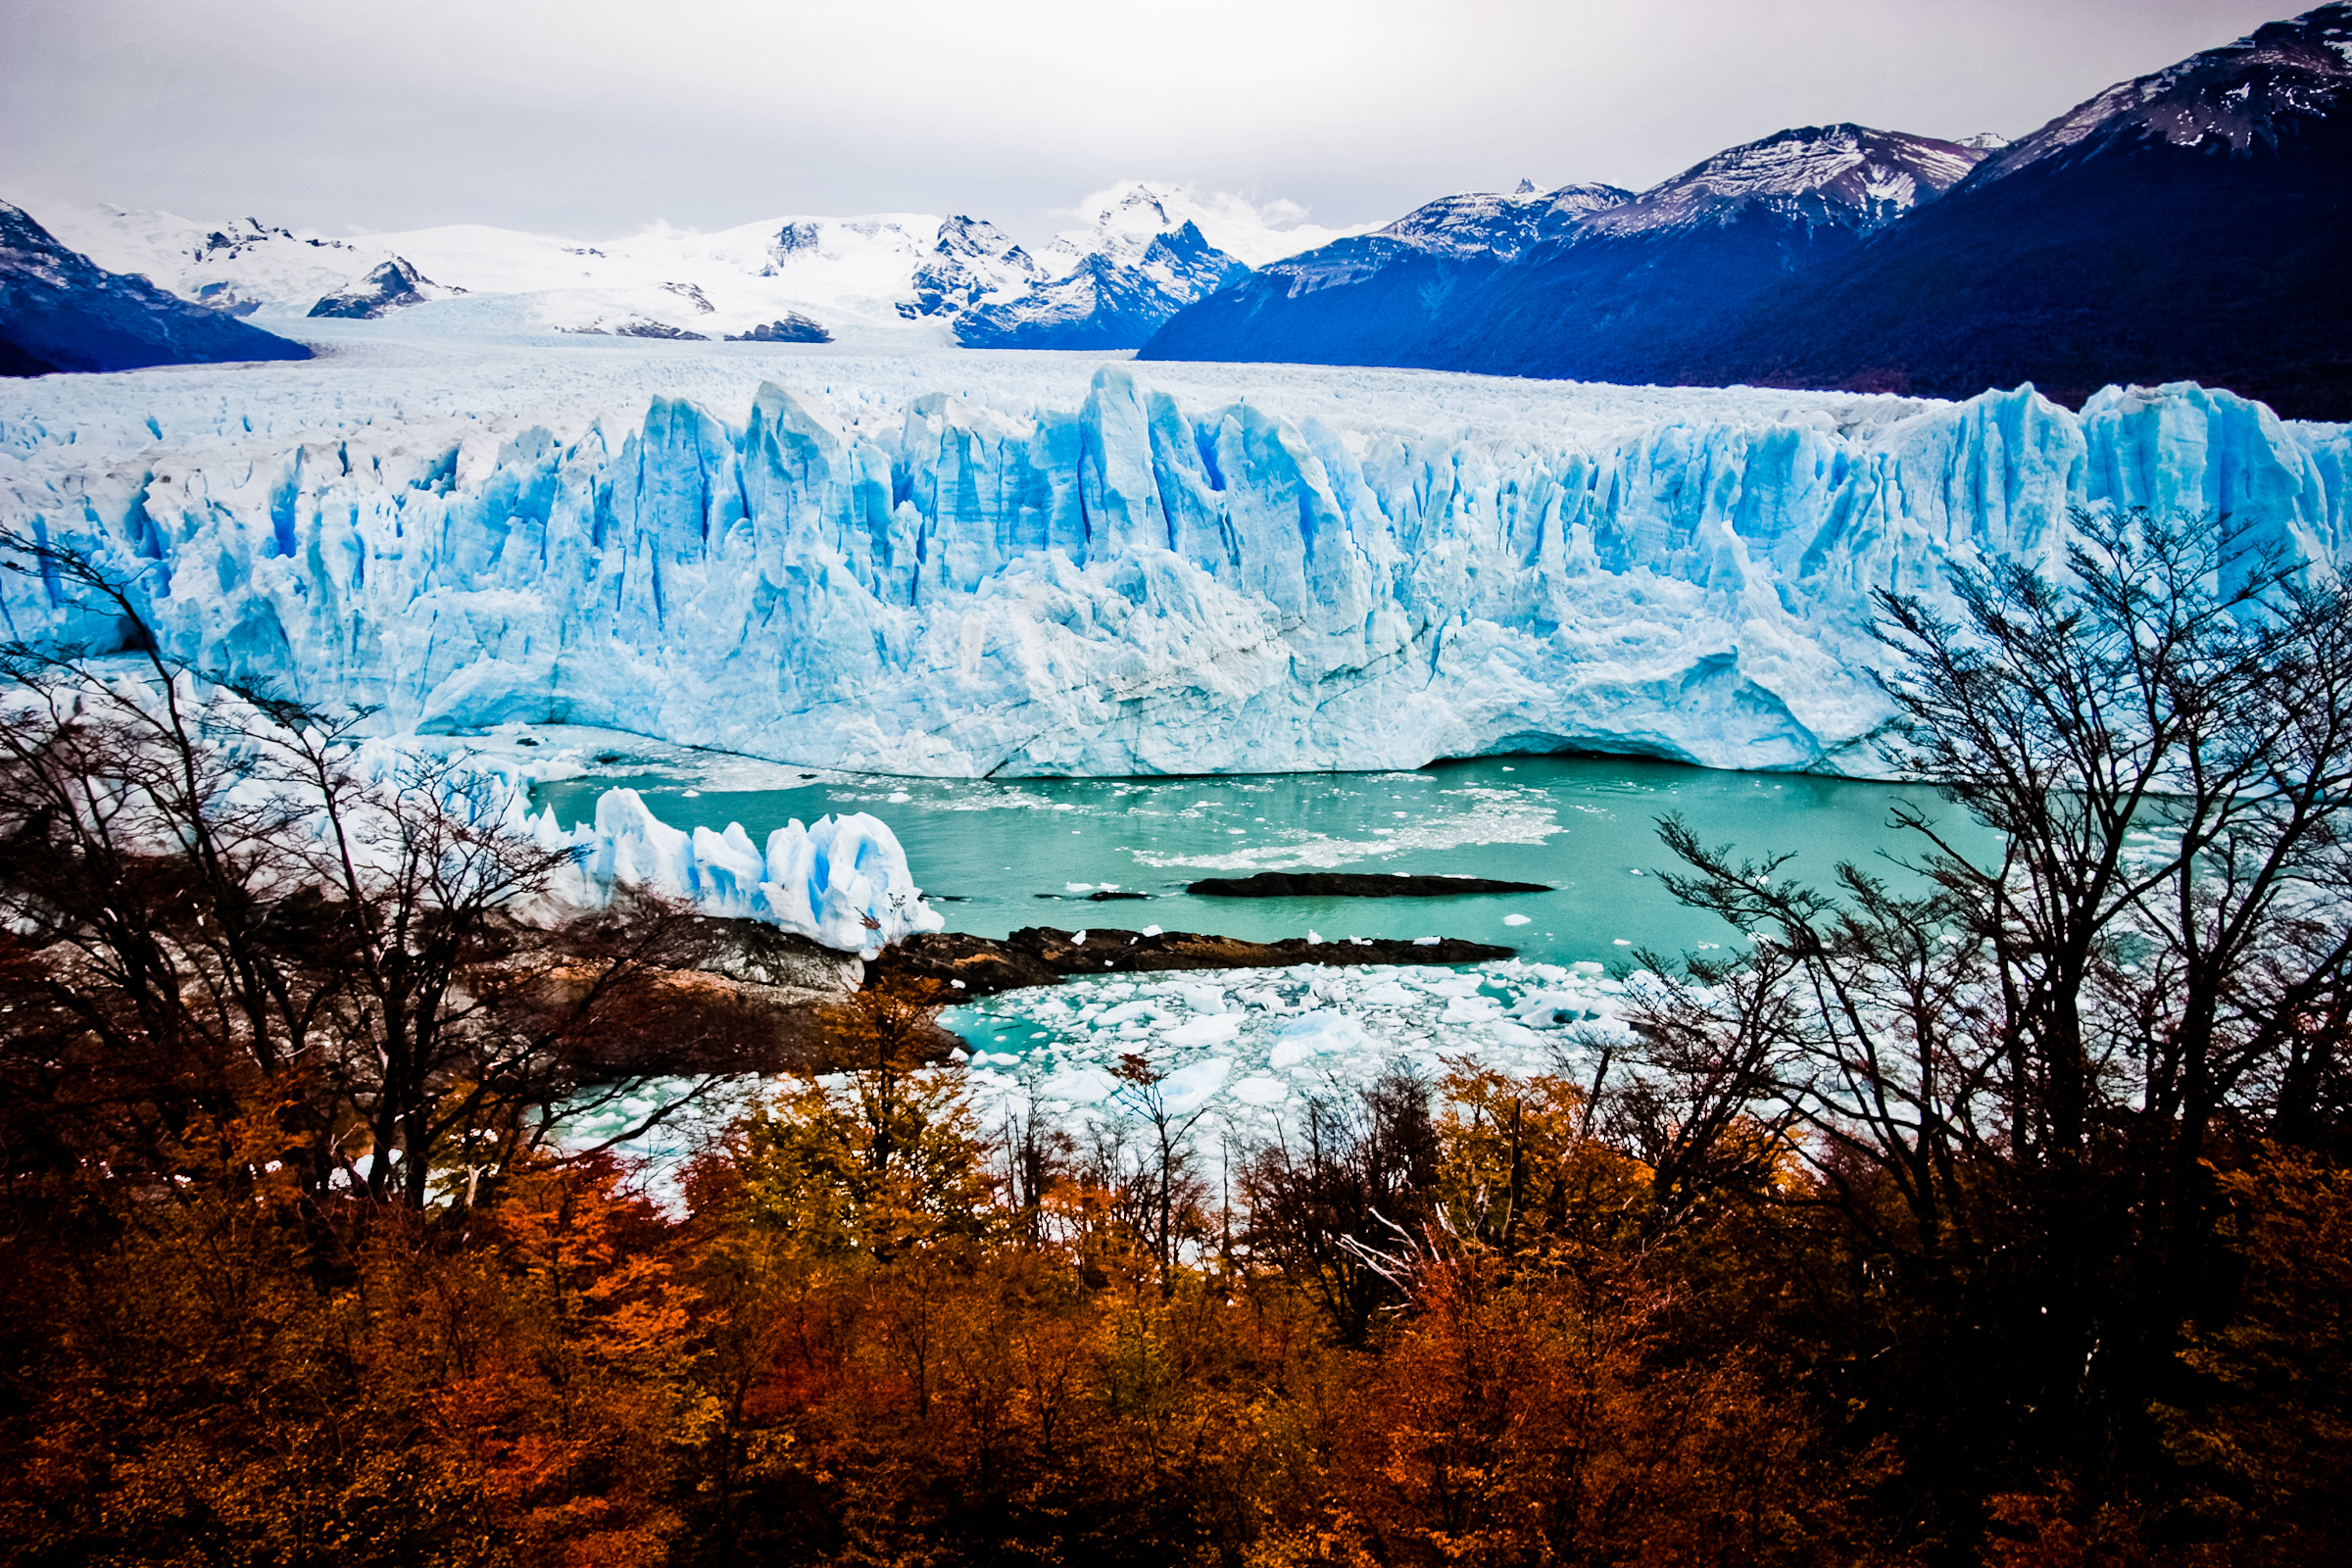  The Perrito Moreno Glacier, El Calafate, Argentina 2009. 